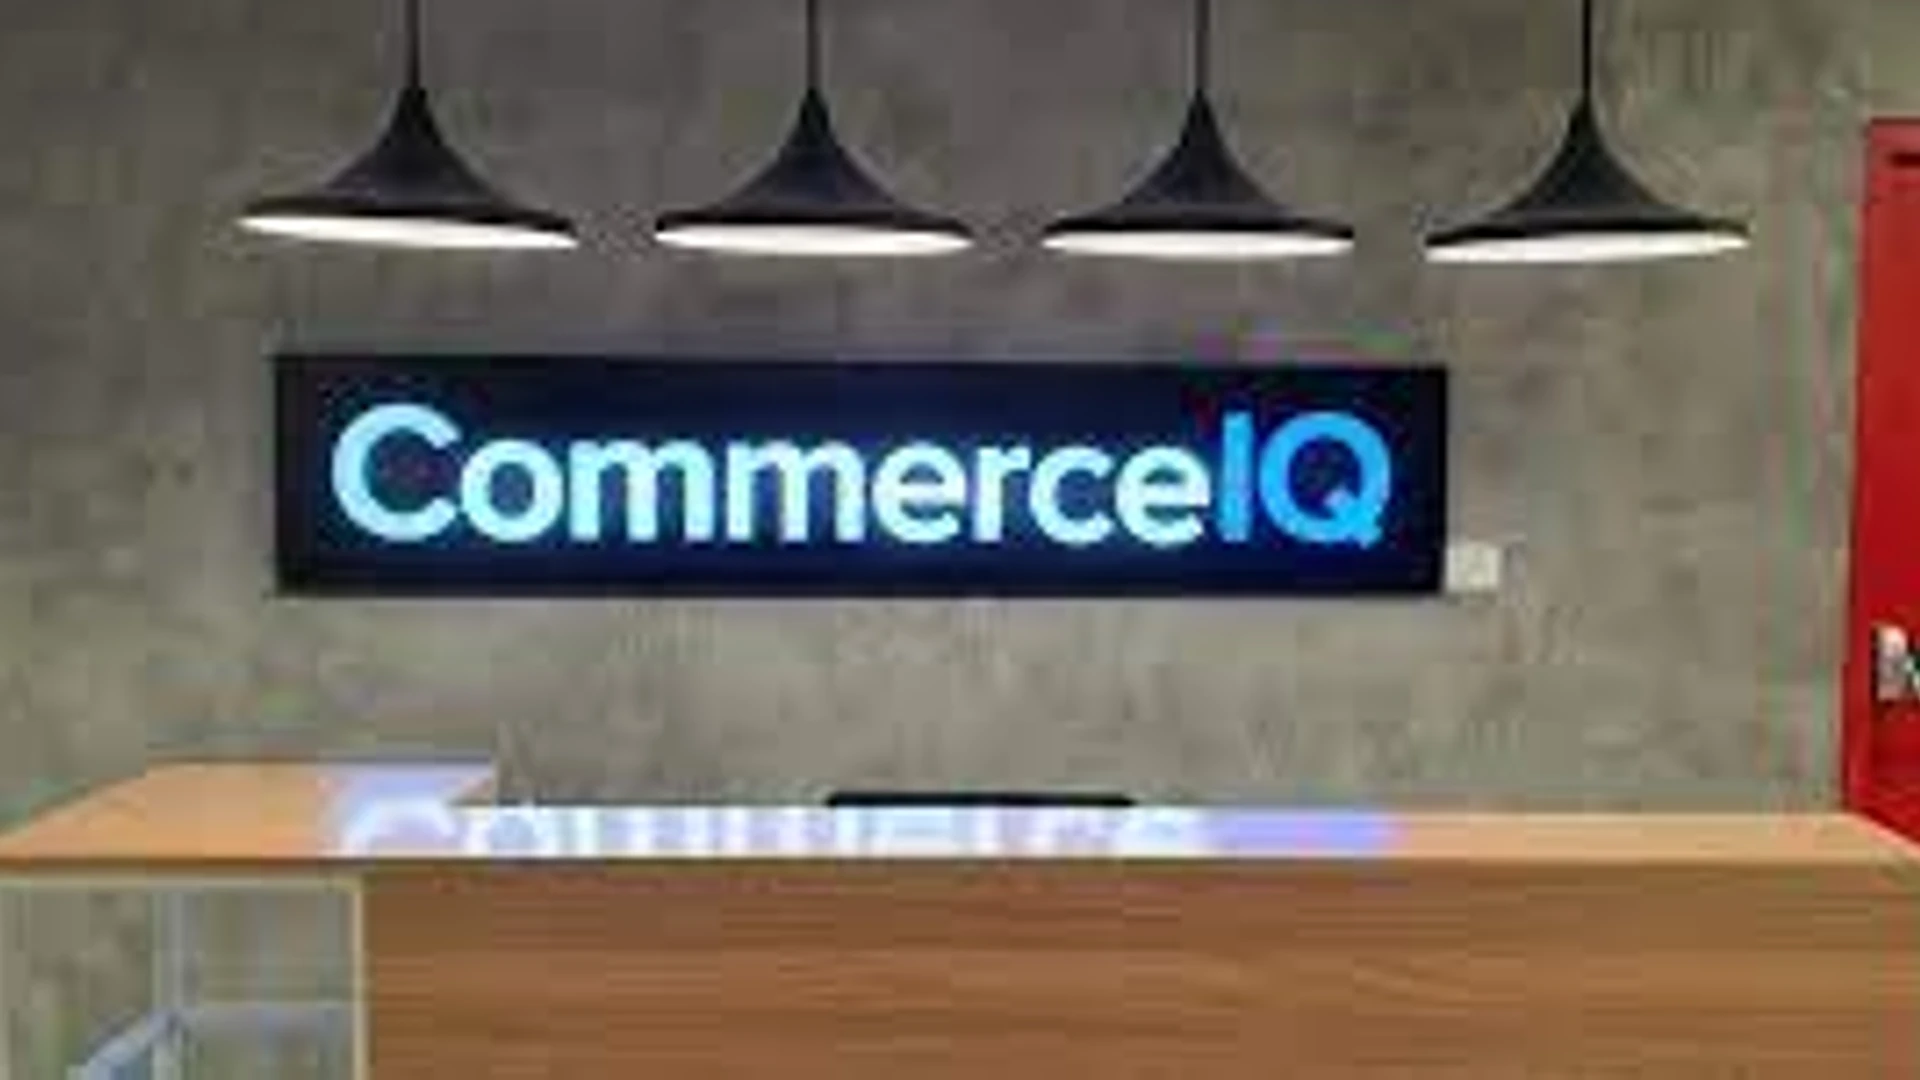 CommerceIQ Evolves India’s Latest Startup Unicorn After $115 Million Fundraise.